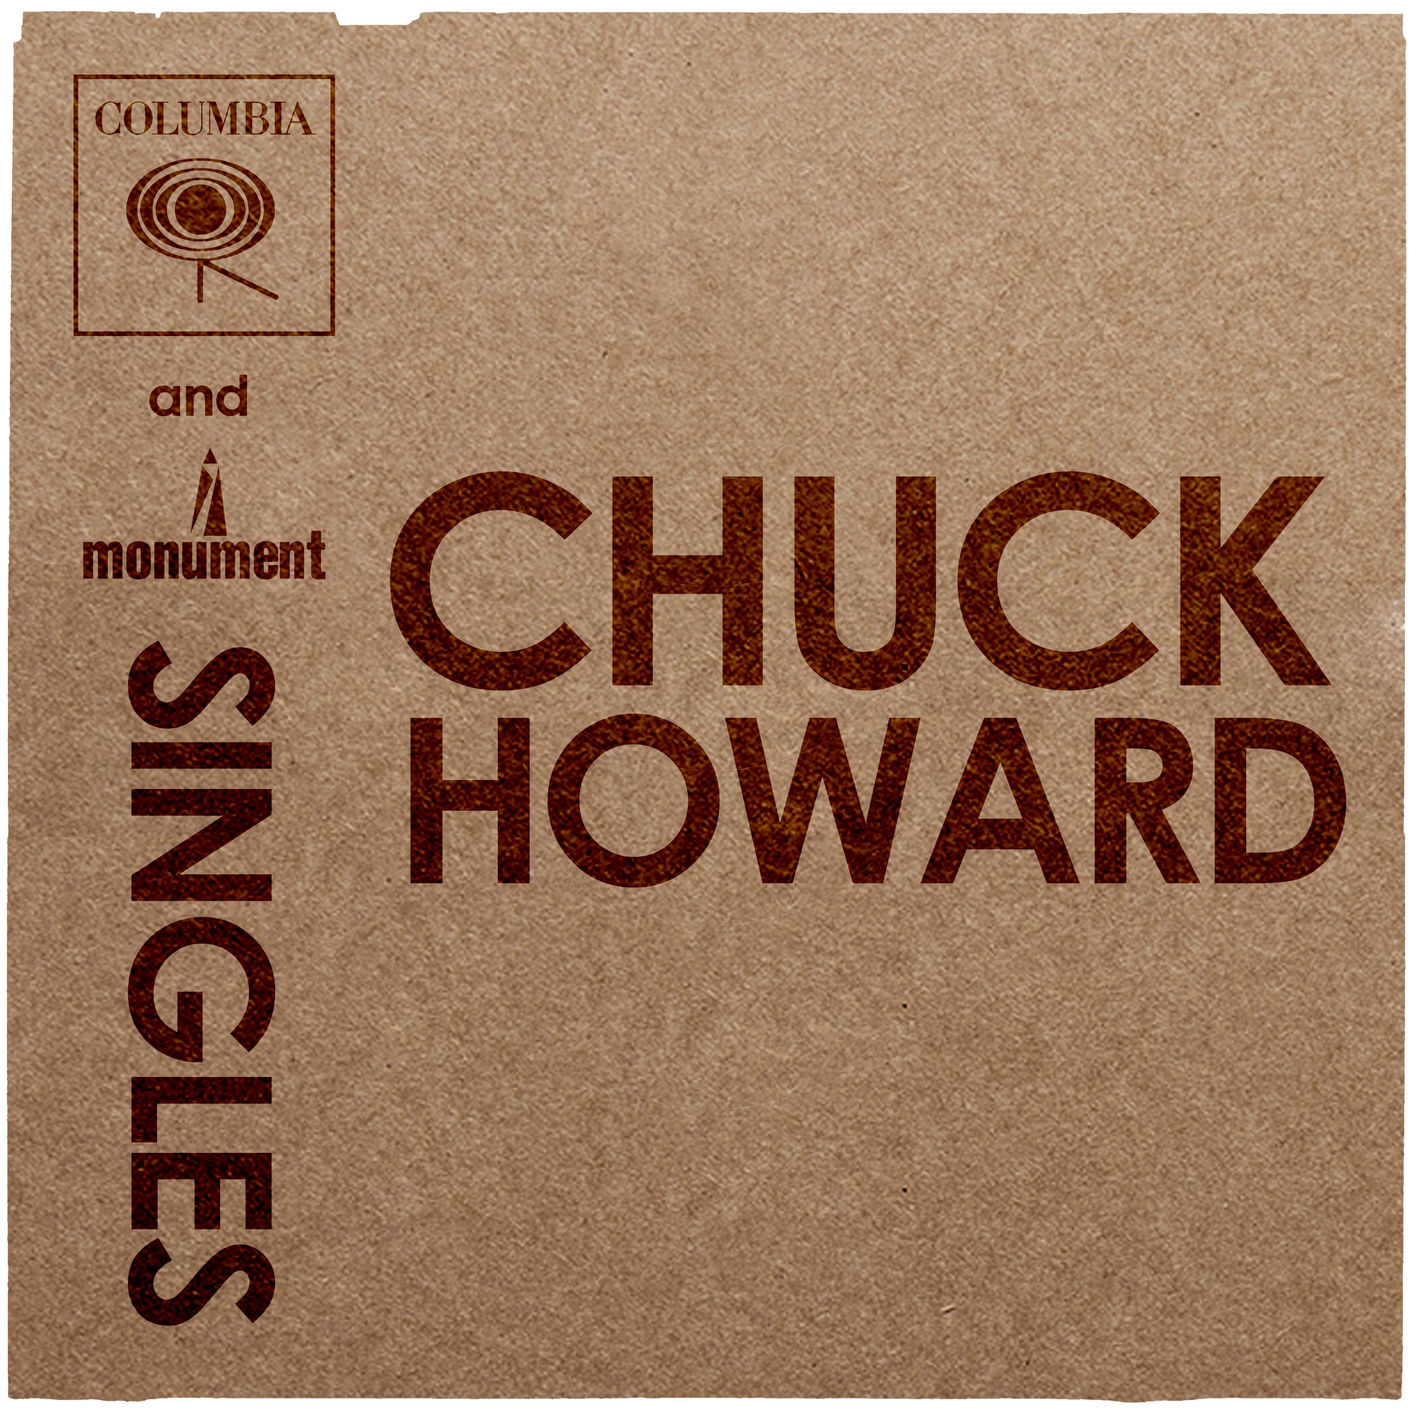 CHUCK HOWARD - Columbia & Monument Singles (2018) [FLAC 24bit/96kHz]